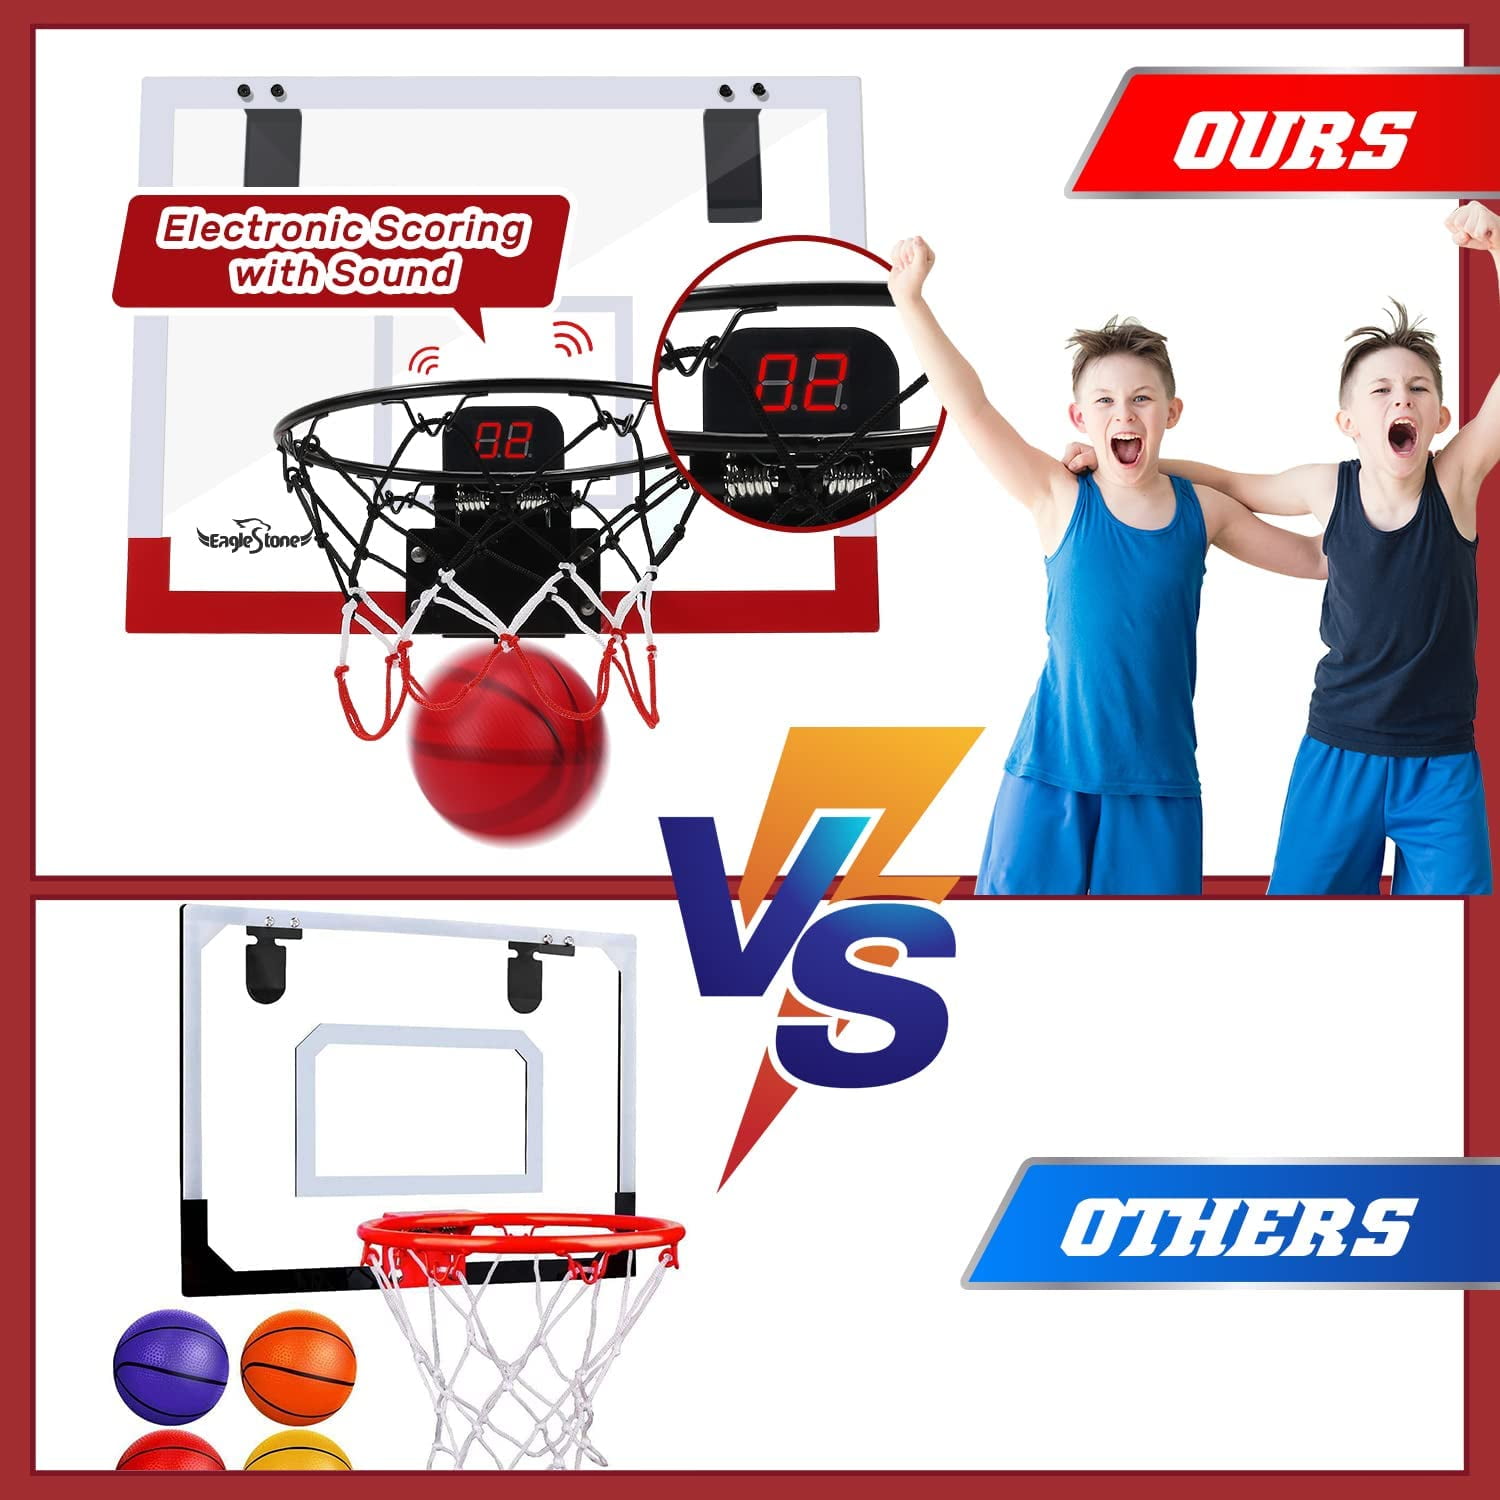 Kids Basketball Hoop Arcade Game W/Electronic Scoreboard Cheer Sound,  Basketball Hoop Indoor Outdoor…See more Kids Basketball Hoop Arcade Game